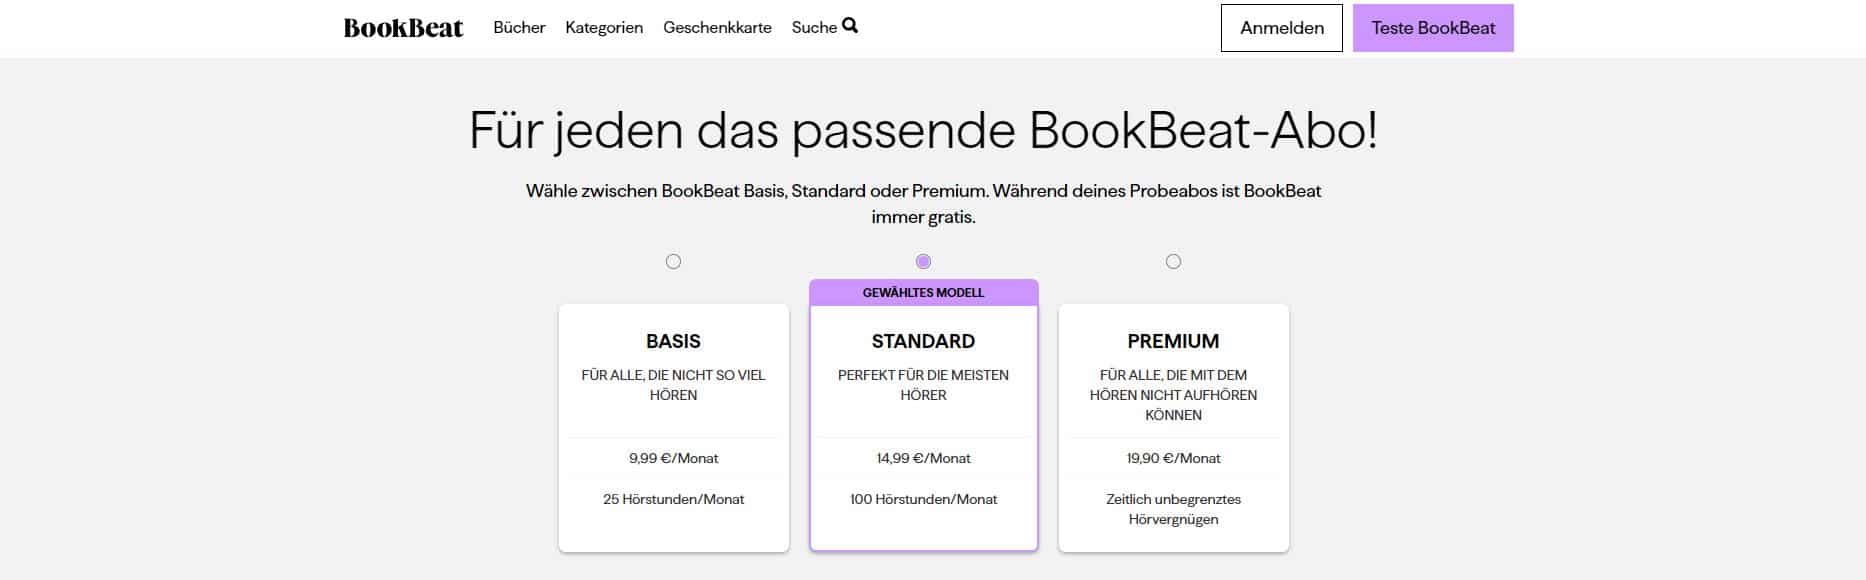 BookBeat Kosten/Preise